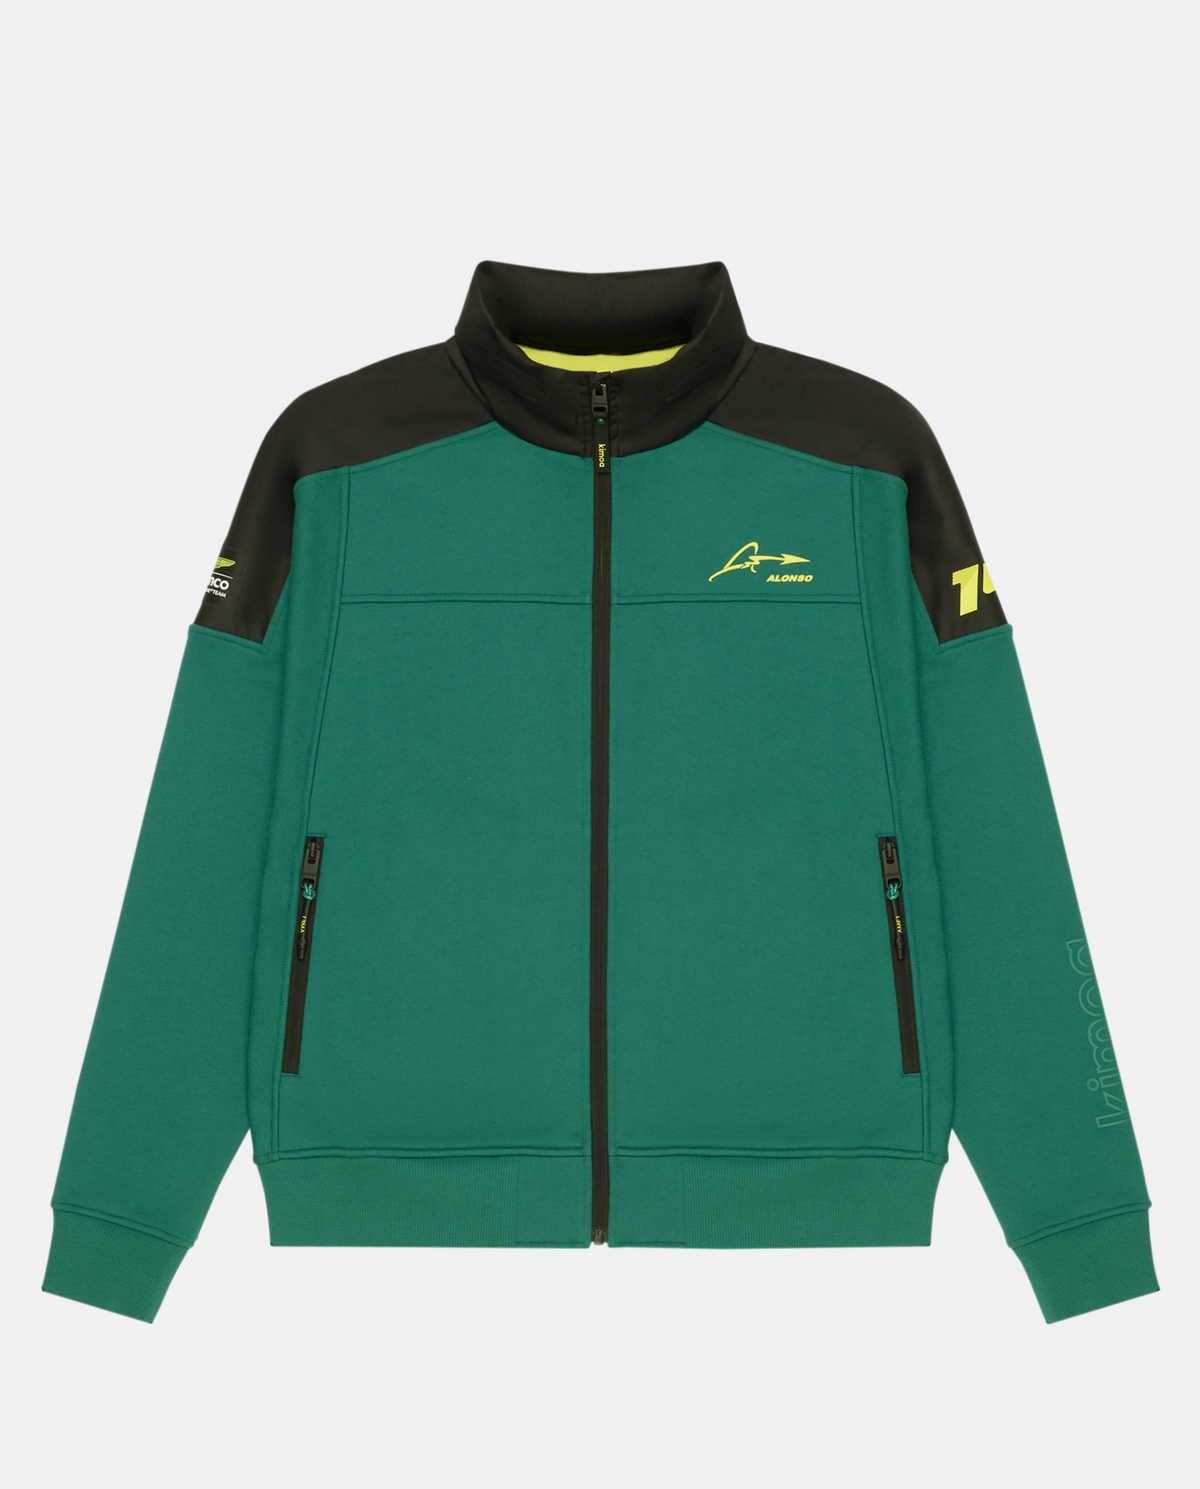 Aston Martin F1 Team x Kimoa Bicolor Sweat Jacket green